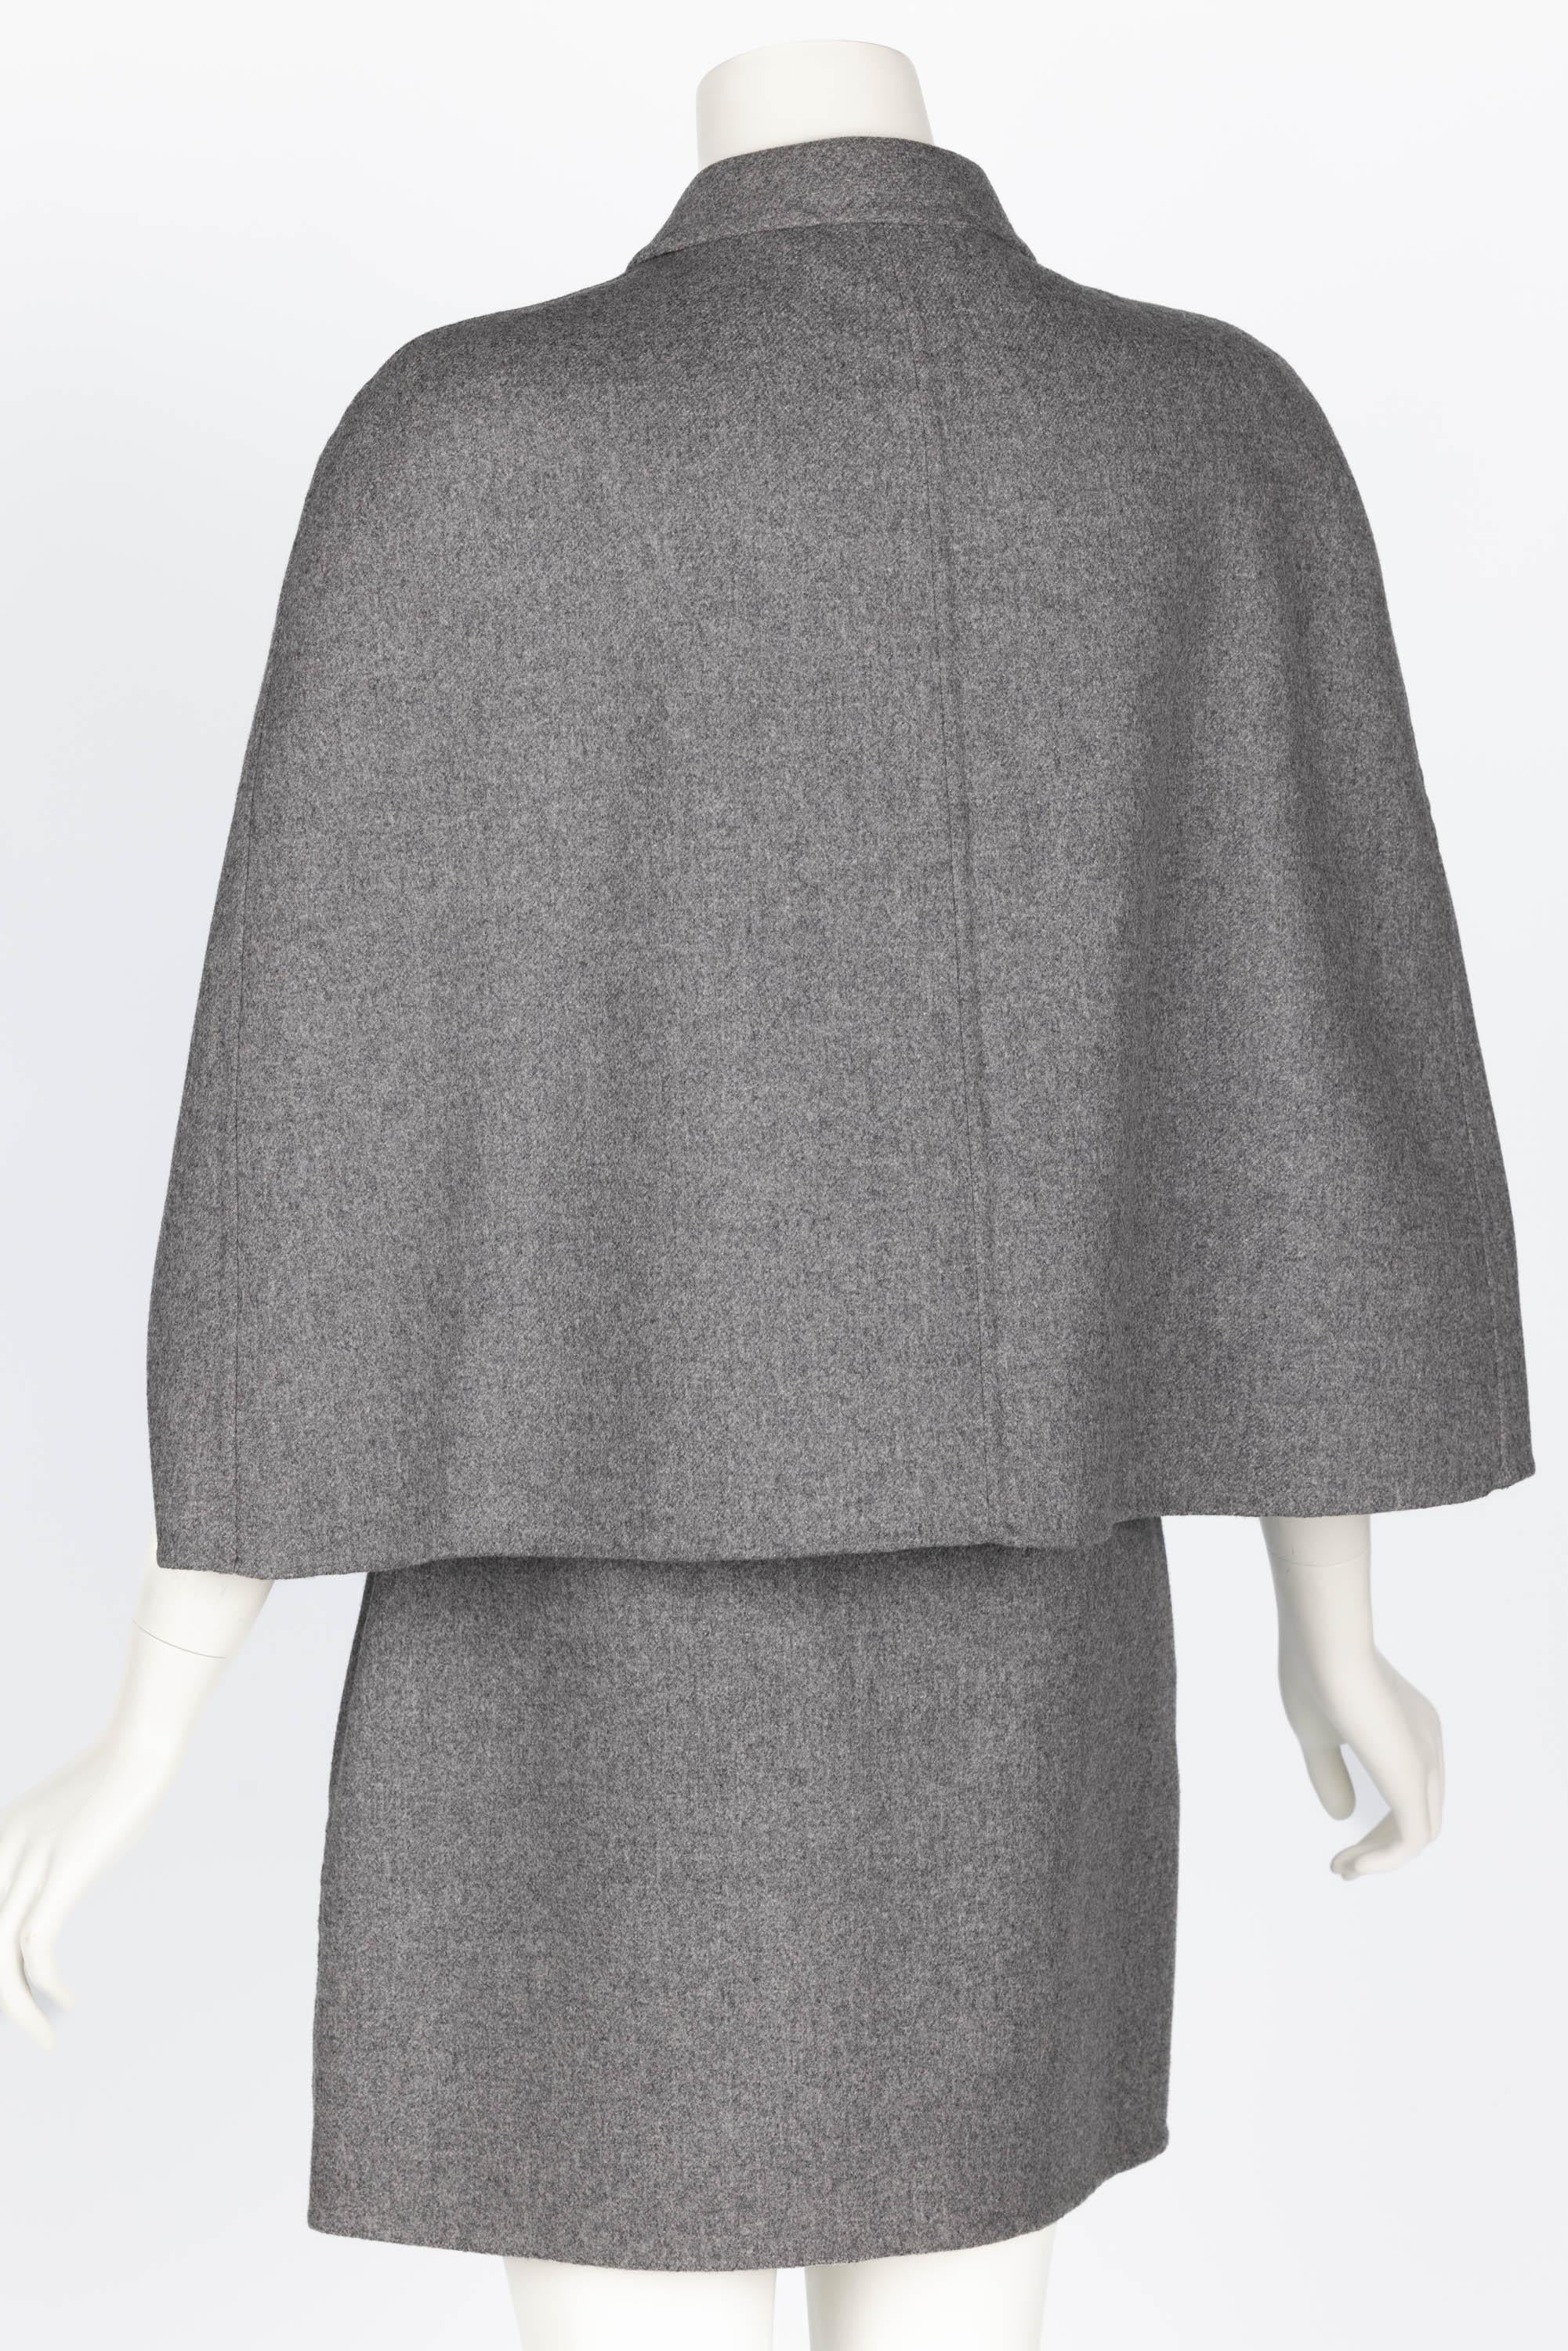 Valentino Grey Wool Angora Cape Mini Skirt Suit Set For Sale 1